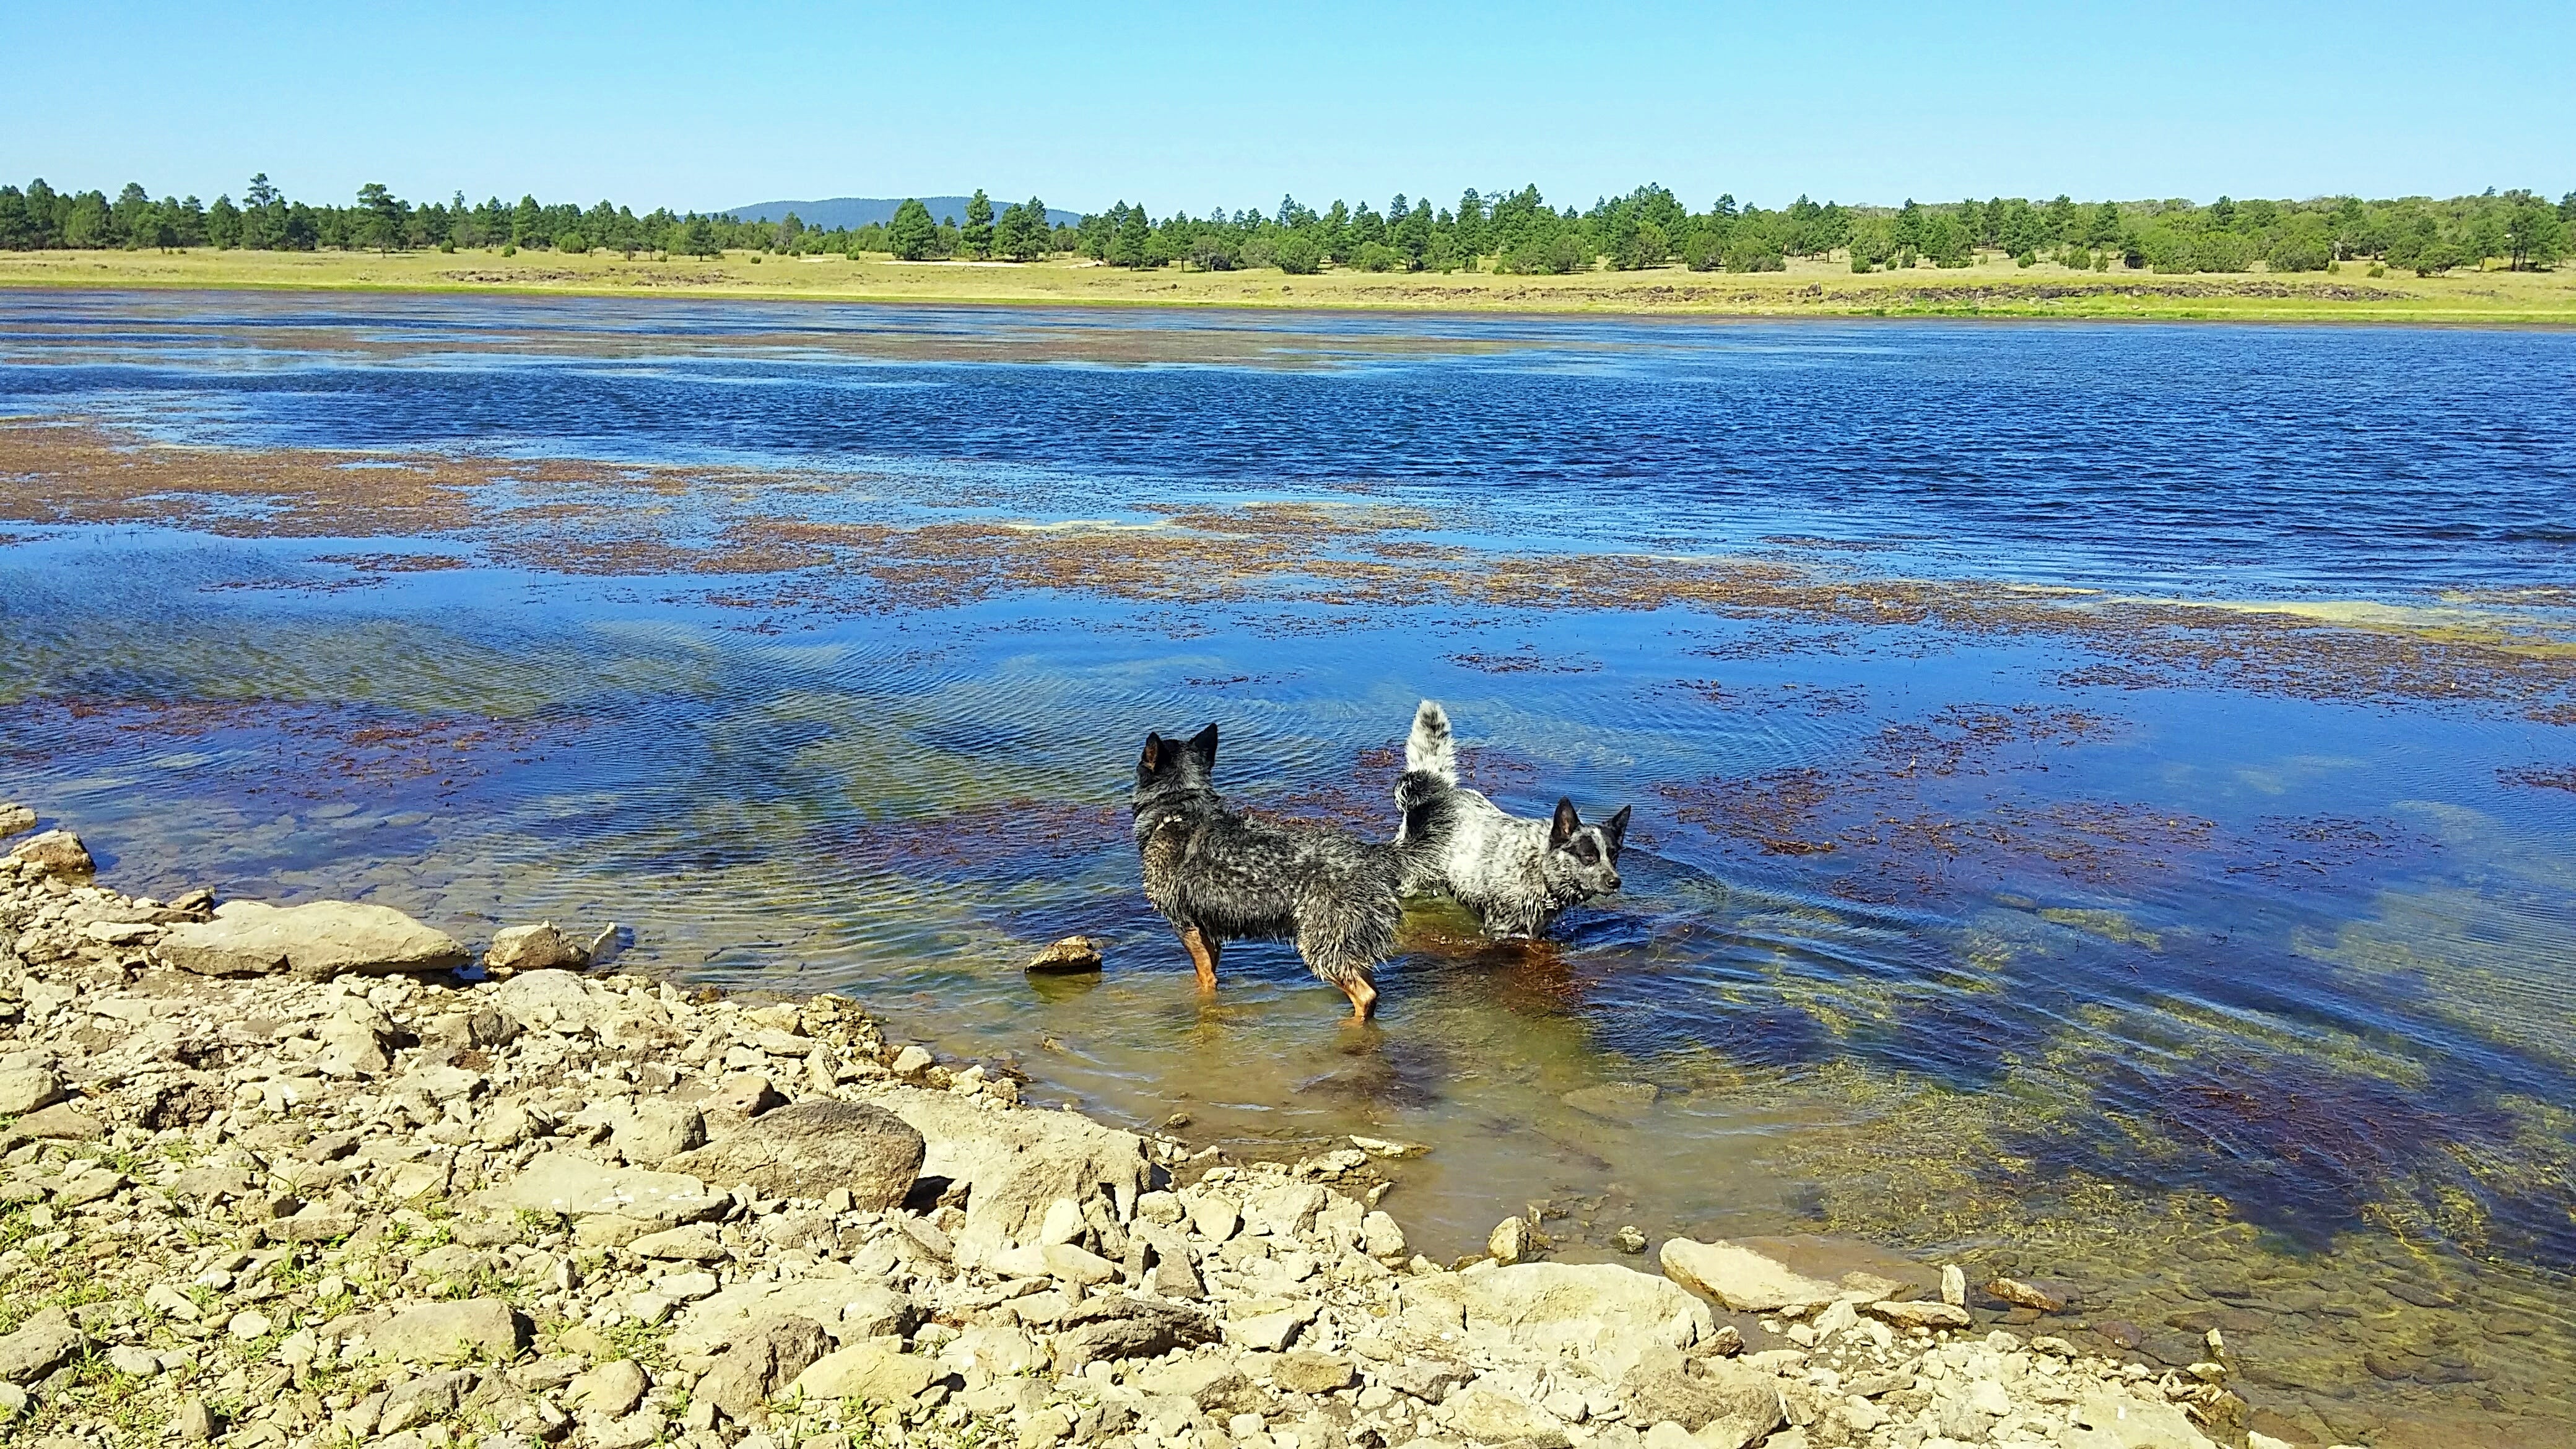 My dogs enjoying the beautiful water :)